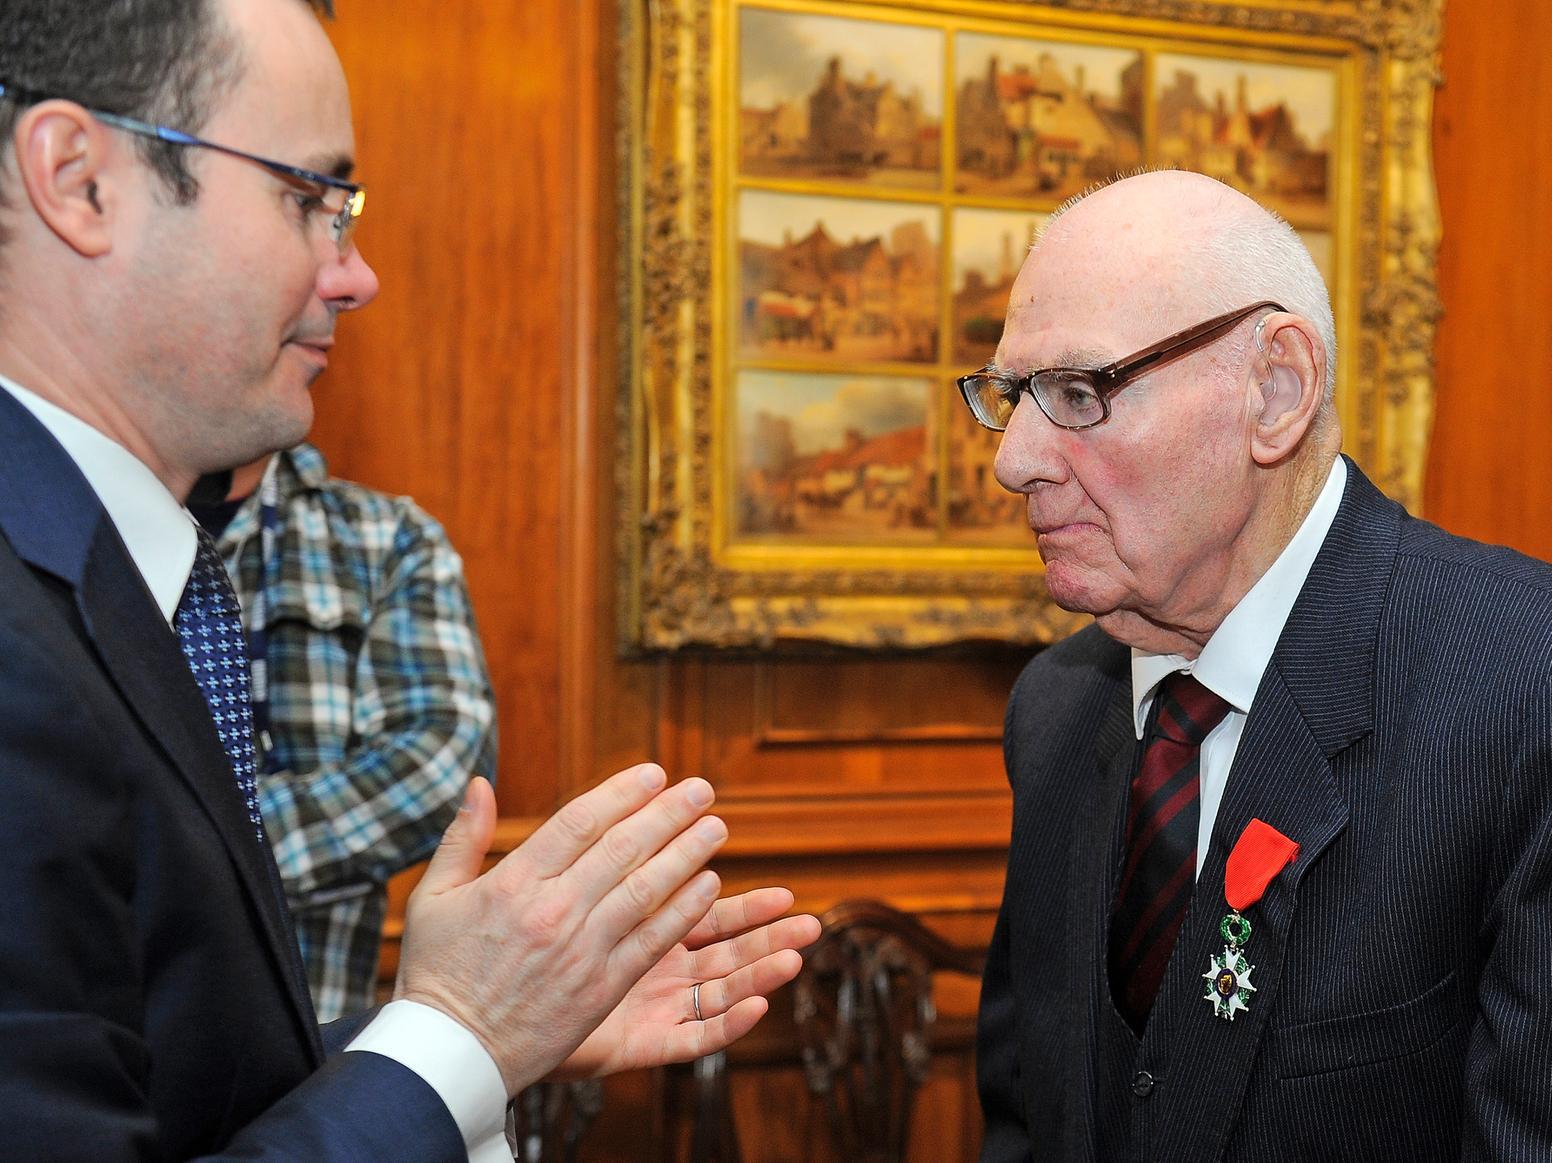 The French Consul General, Emmanuel Cocher, presented the Chevalier de la Legion d'Honneur medals, Frances highest National Order, to five Scottish veterans, including Tom in 2016.